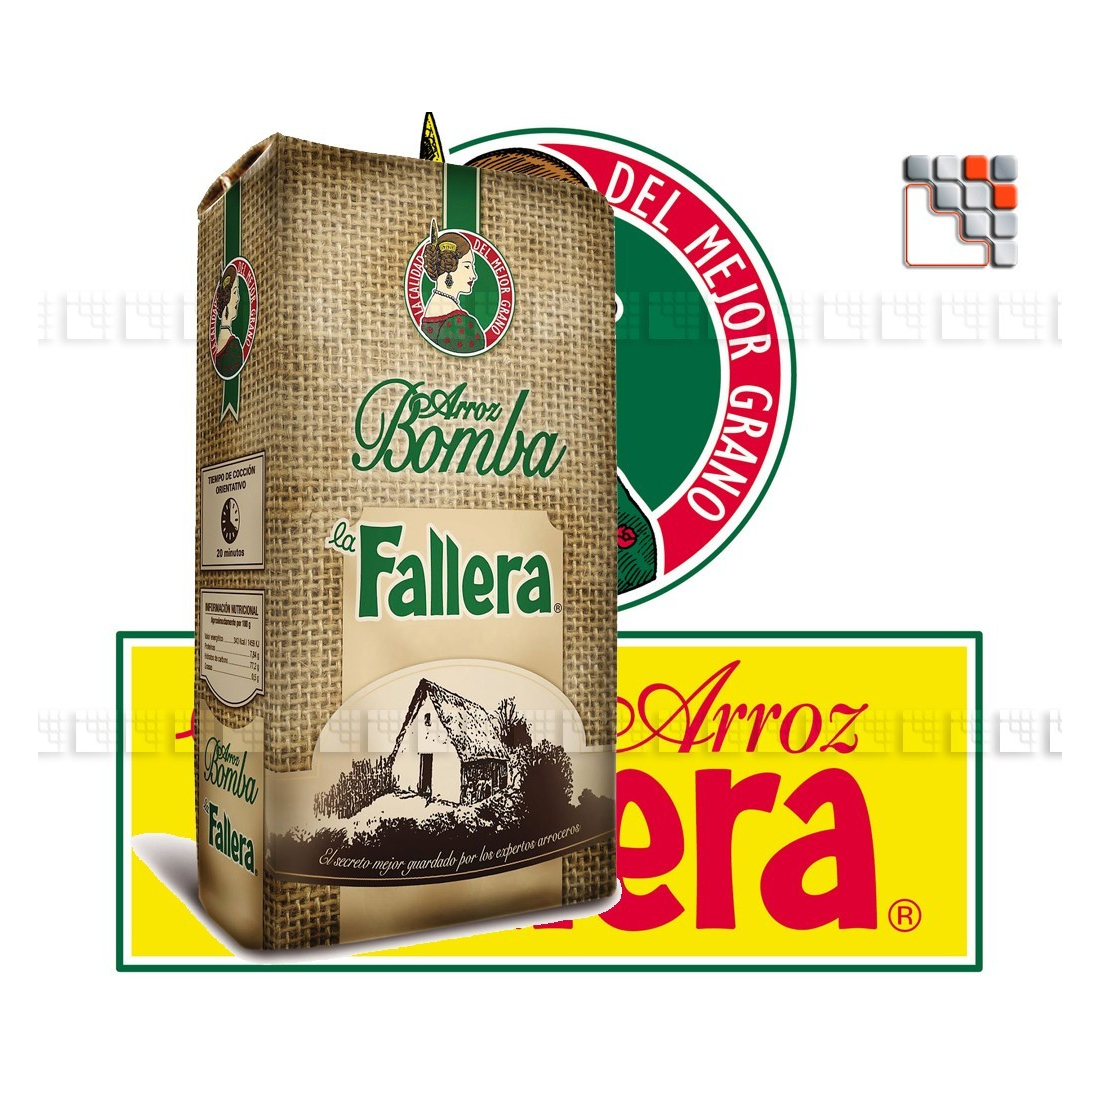 Rice La Fallera Bomba Extra ZR1-F02 A la Plancha® Regional Specialties